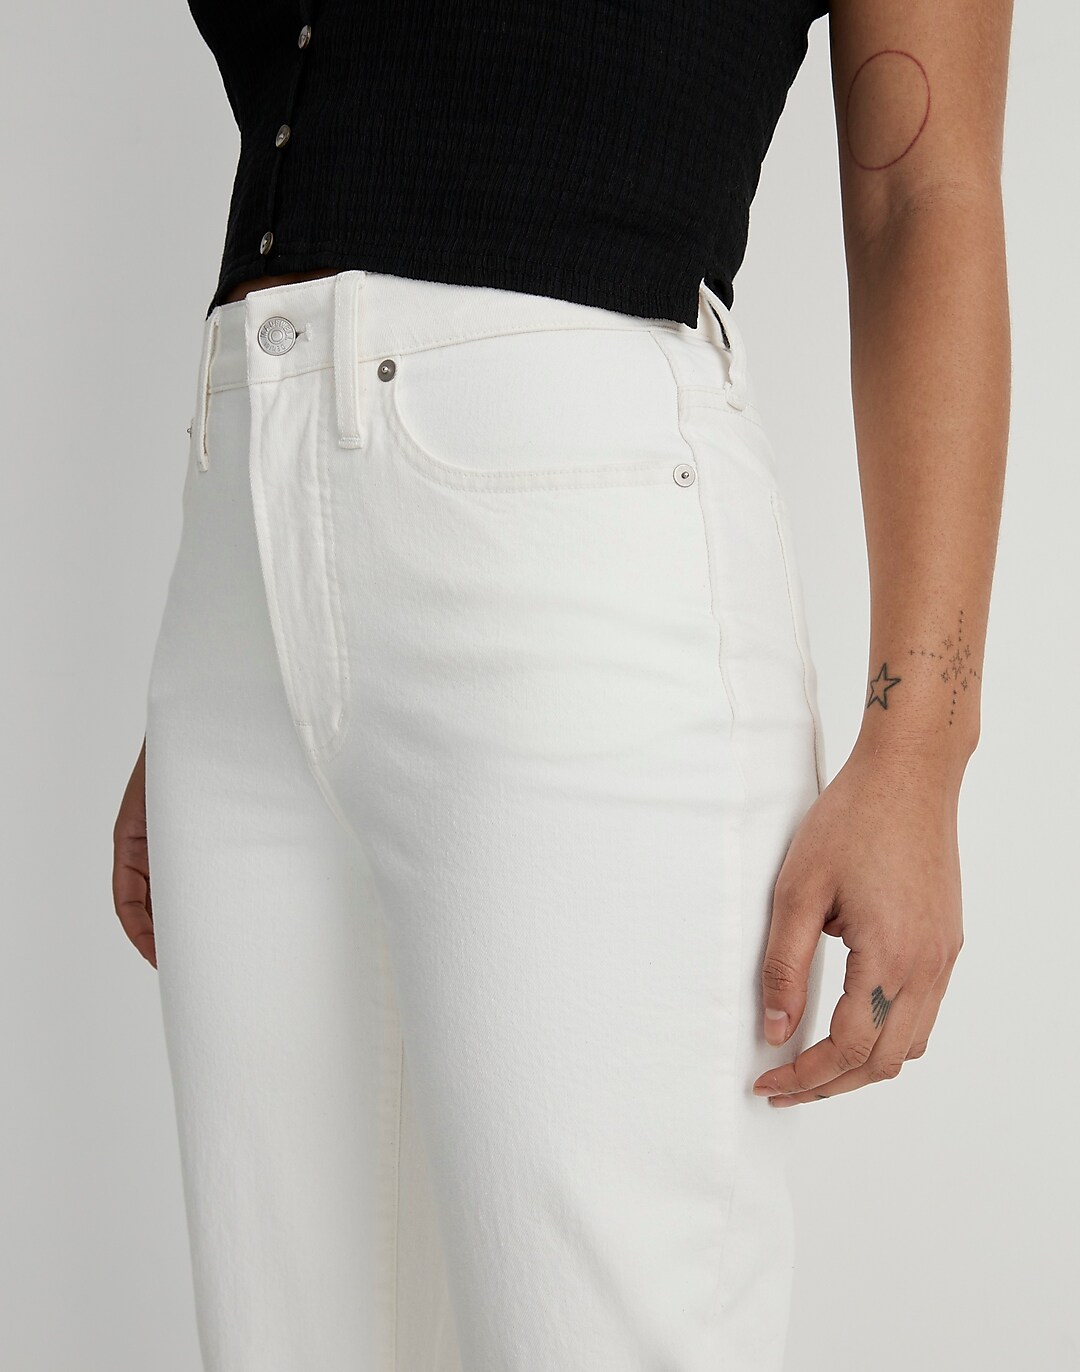 Wide Leg Crop Jeans - White - Curvy Fit